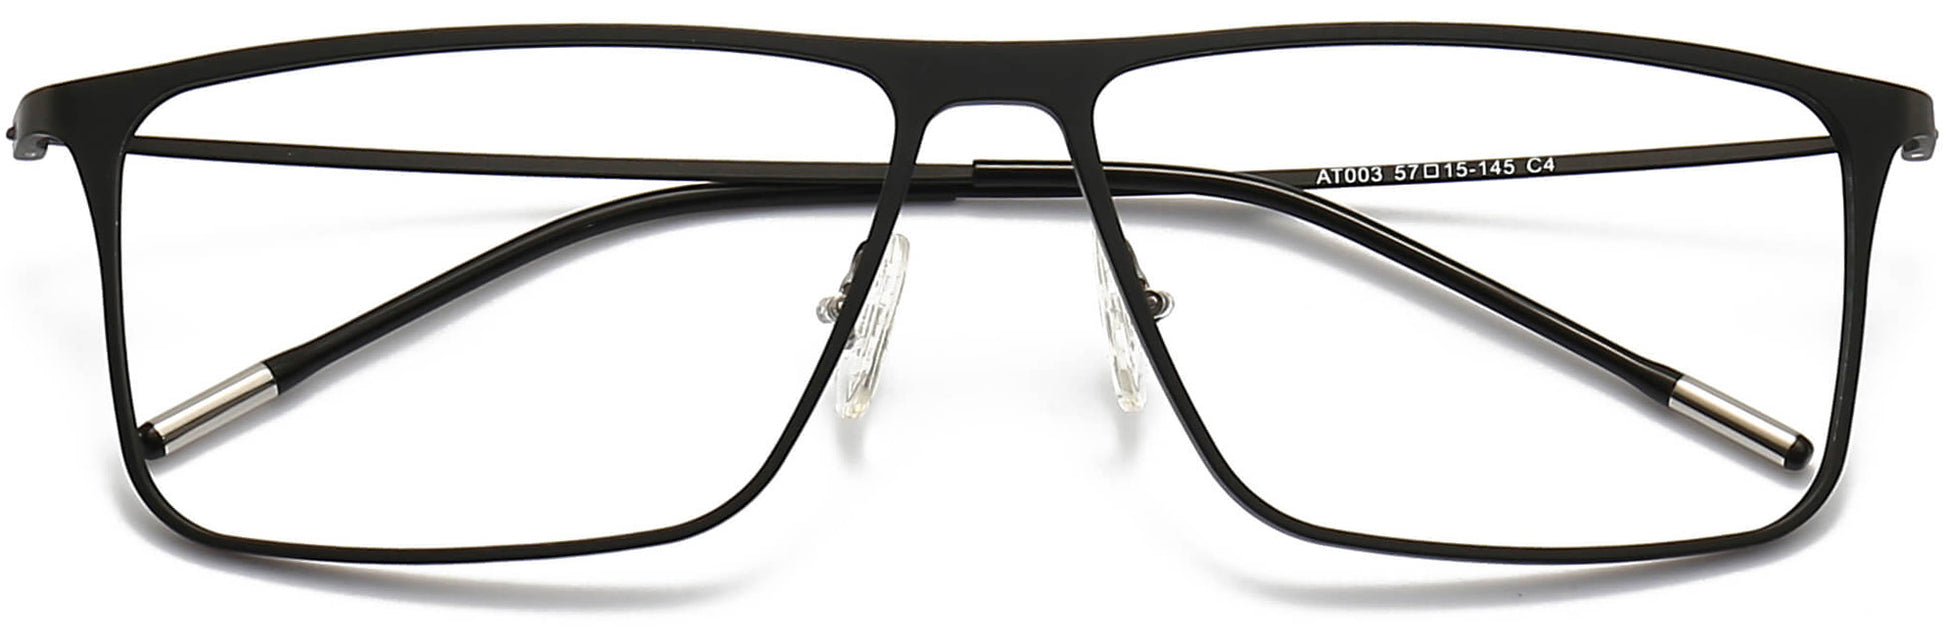 Hugh Rectangle Black Eyeglasses from ANRRI, closed view